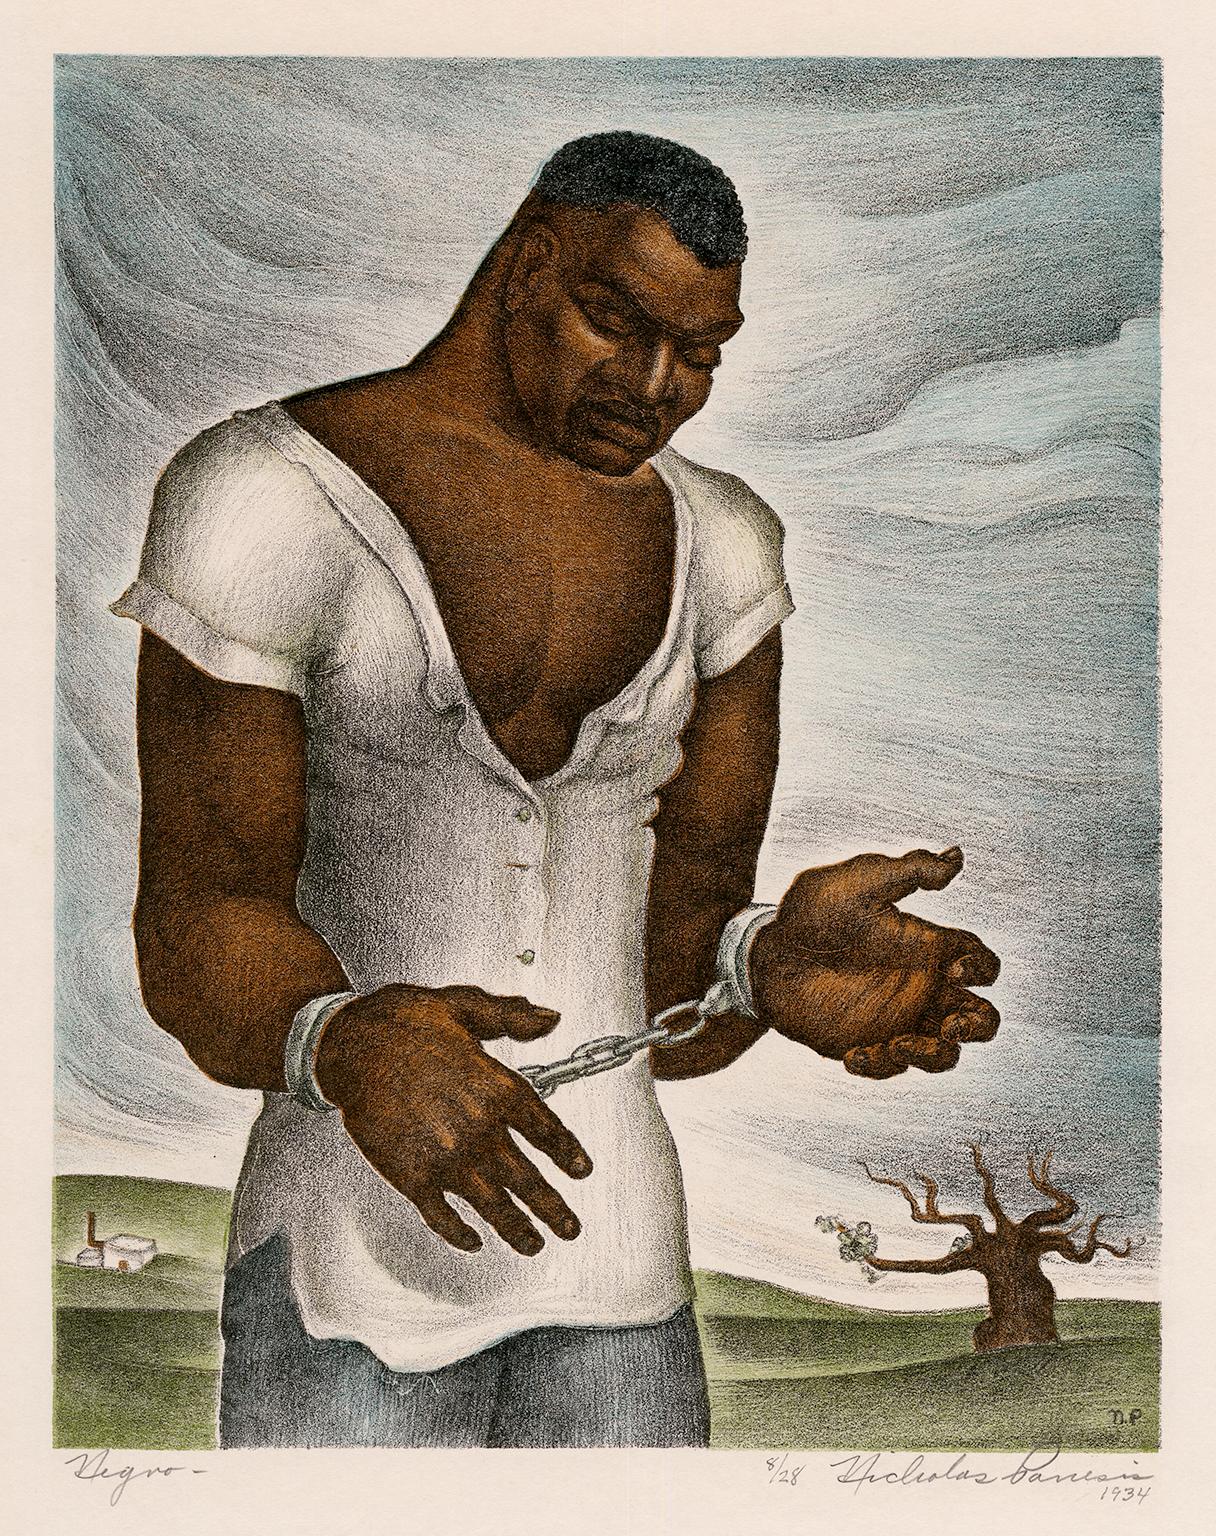 Nicholas Panesis Figurative Print - 'Negro' — California WPA, 1930s Social Realism – African American Subject